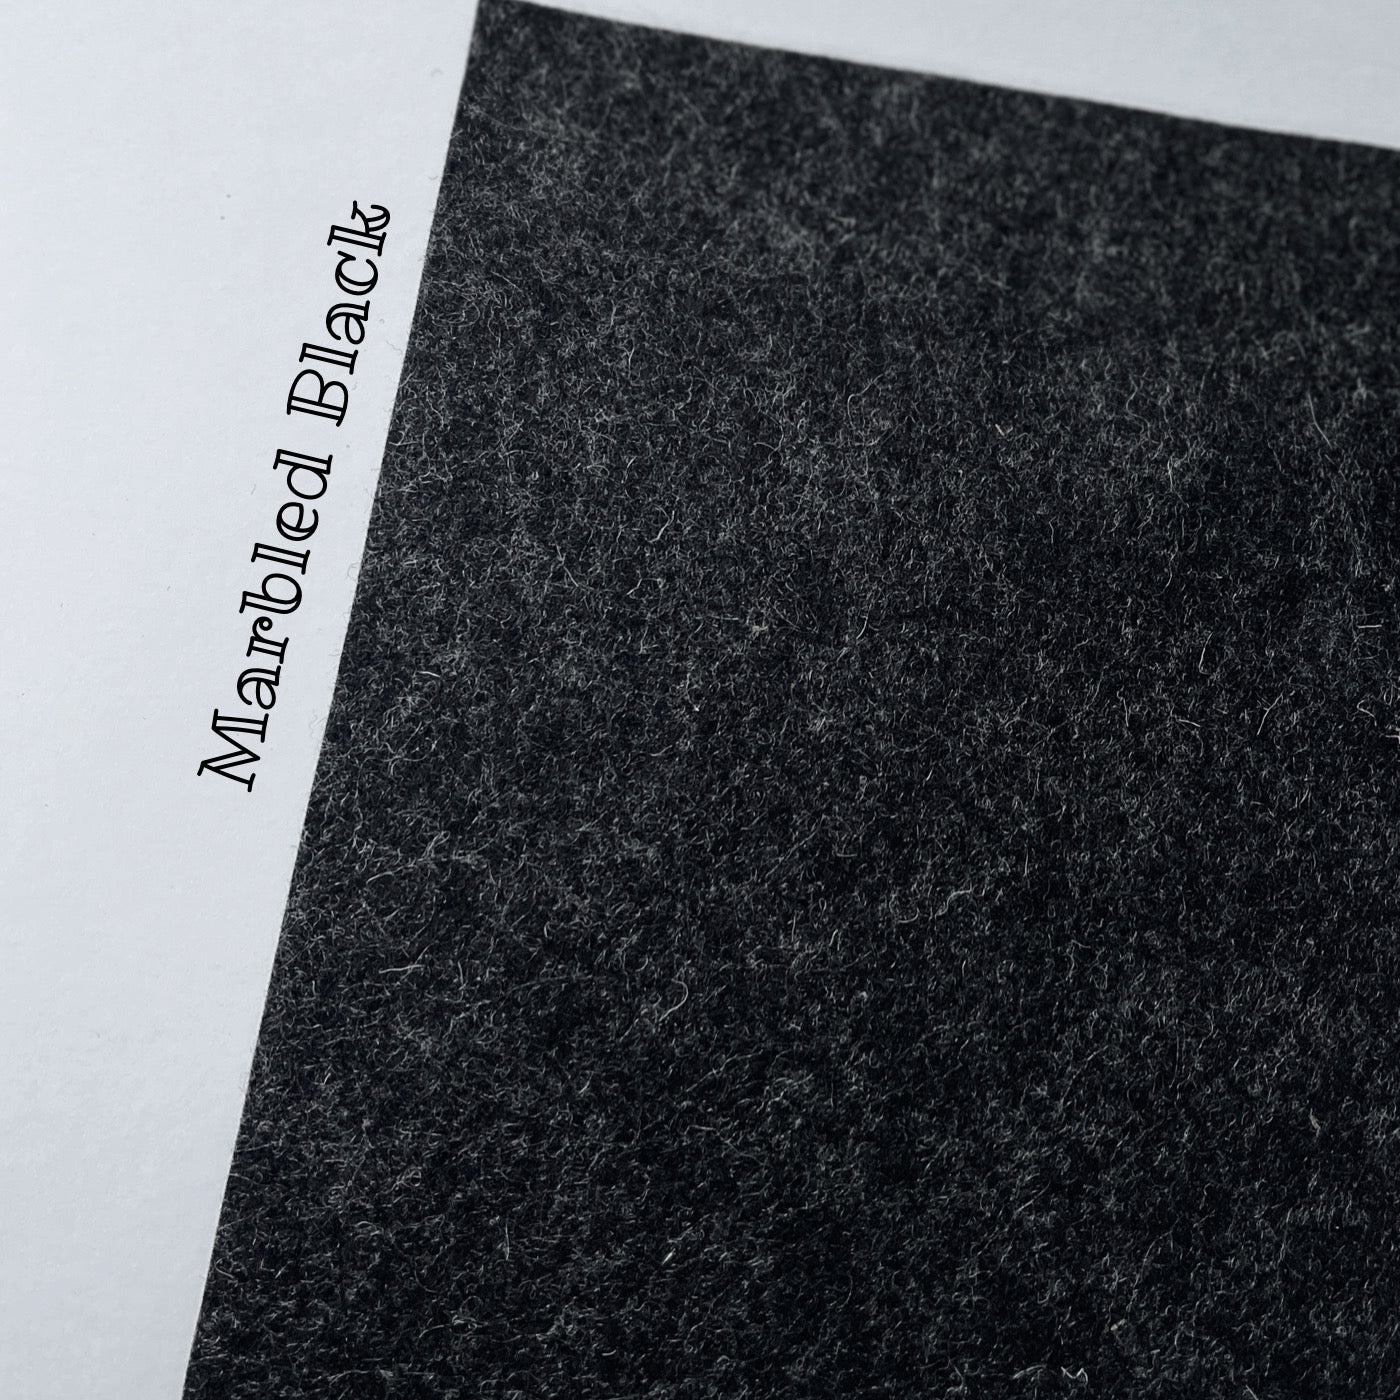 National Nonwovens Licorice Black - Wool Felt Oversized Sheet - 35% Wool Blend - 1 12x18 inch Sheet